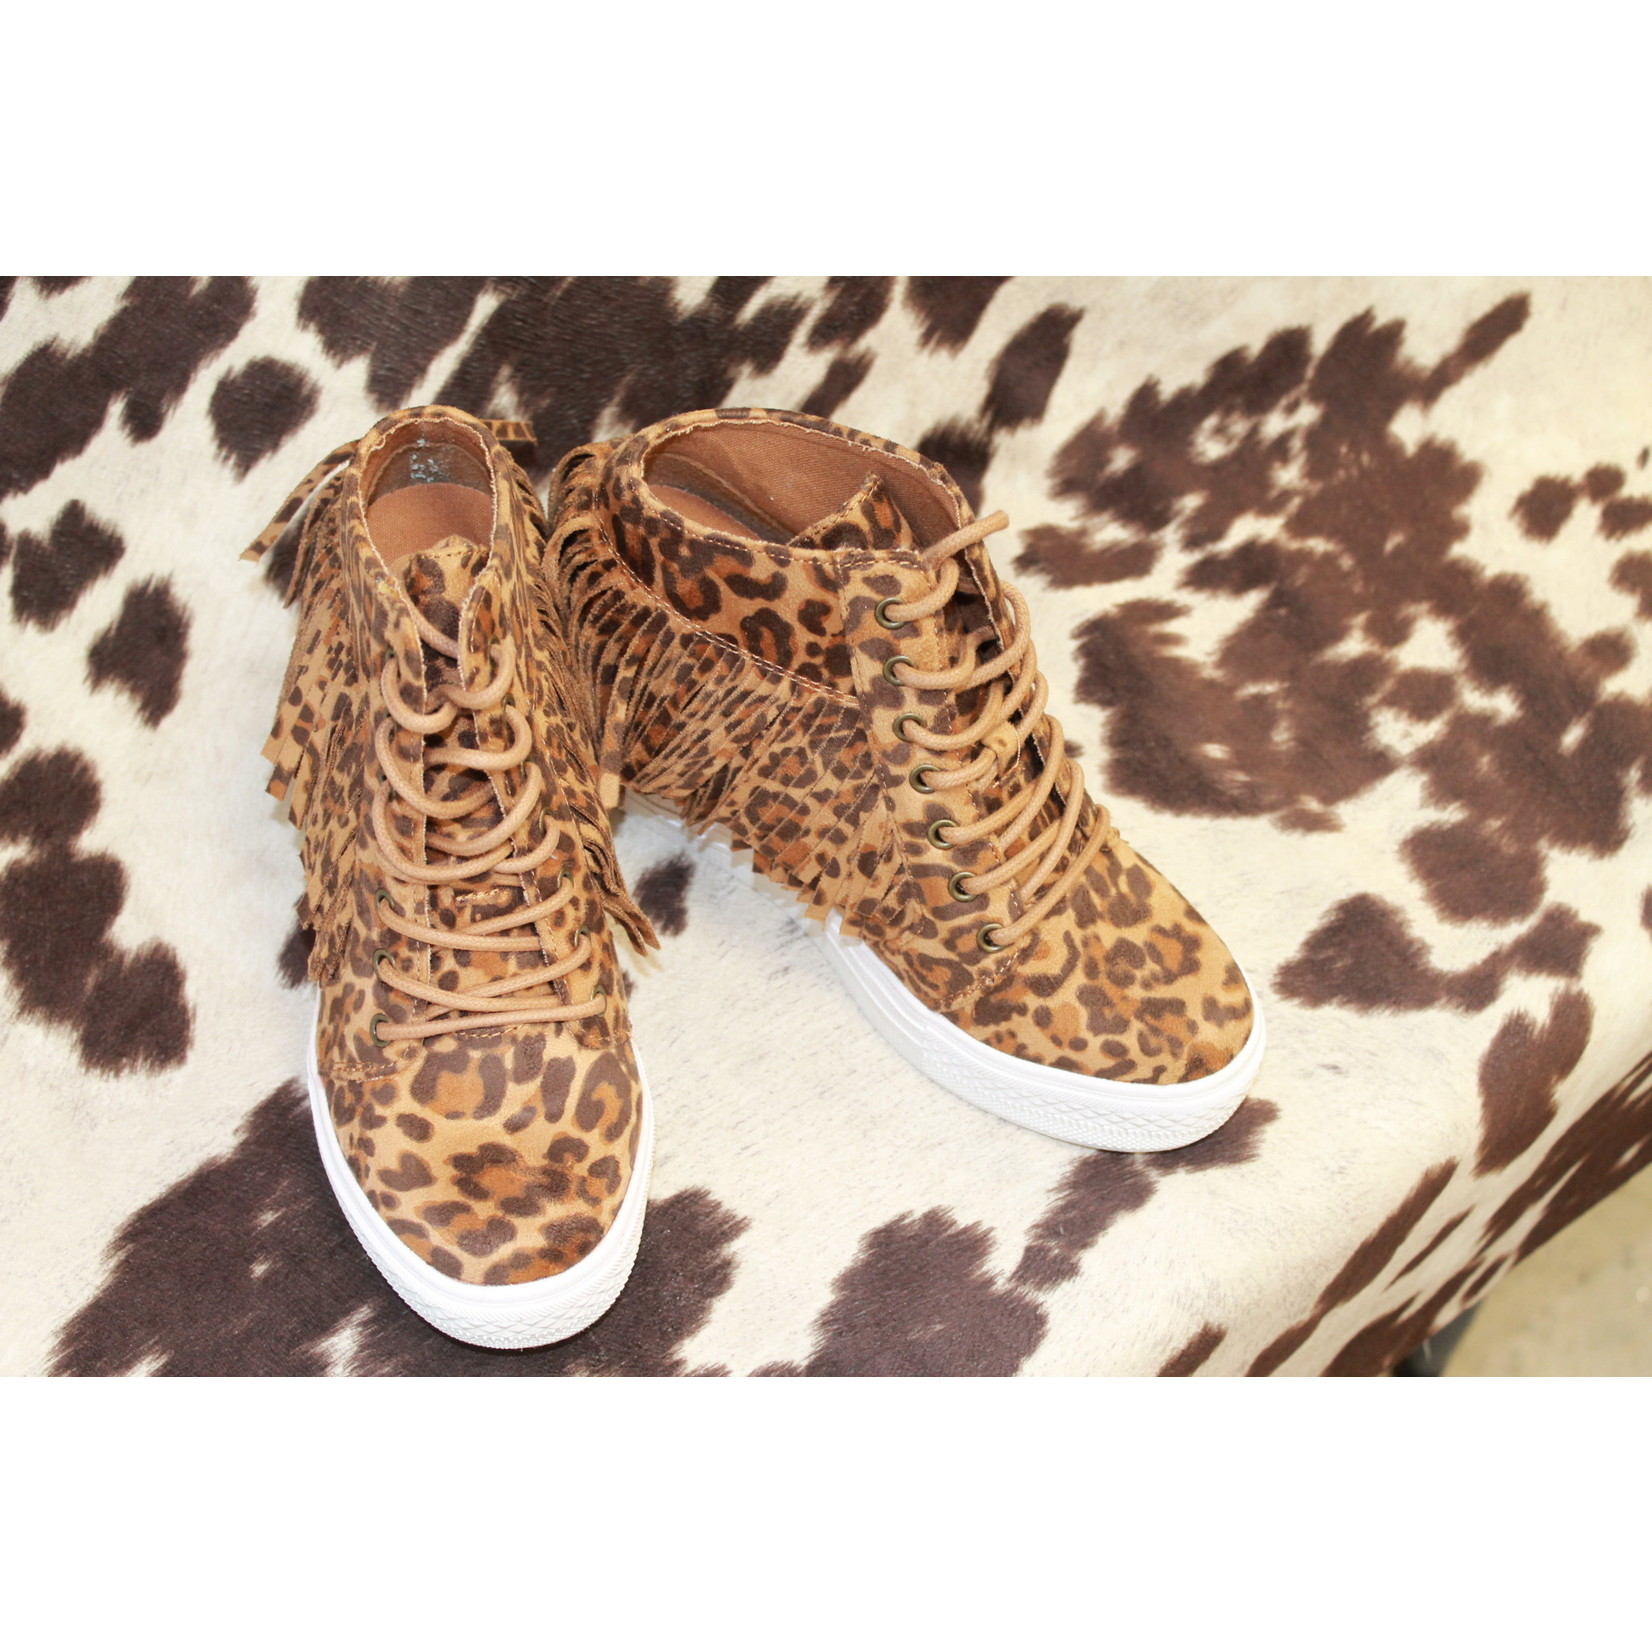 Leopard Fringe bootie tennis shoe